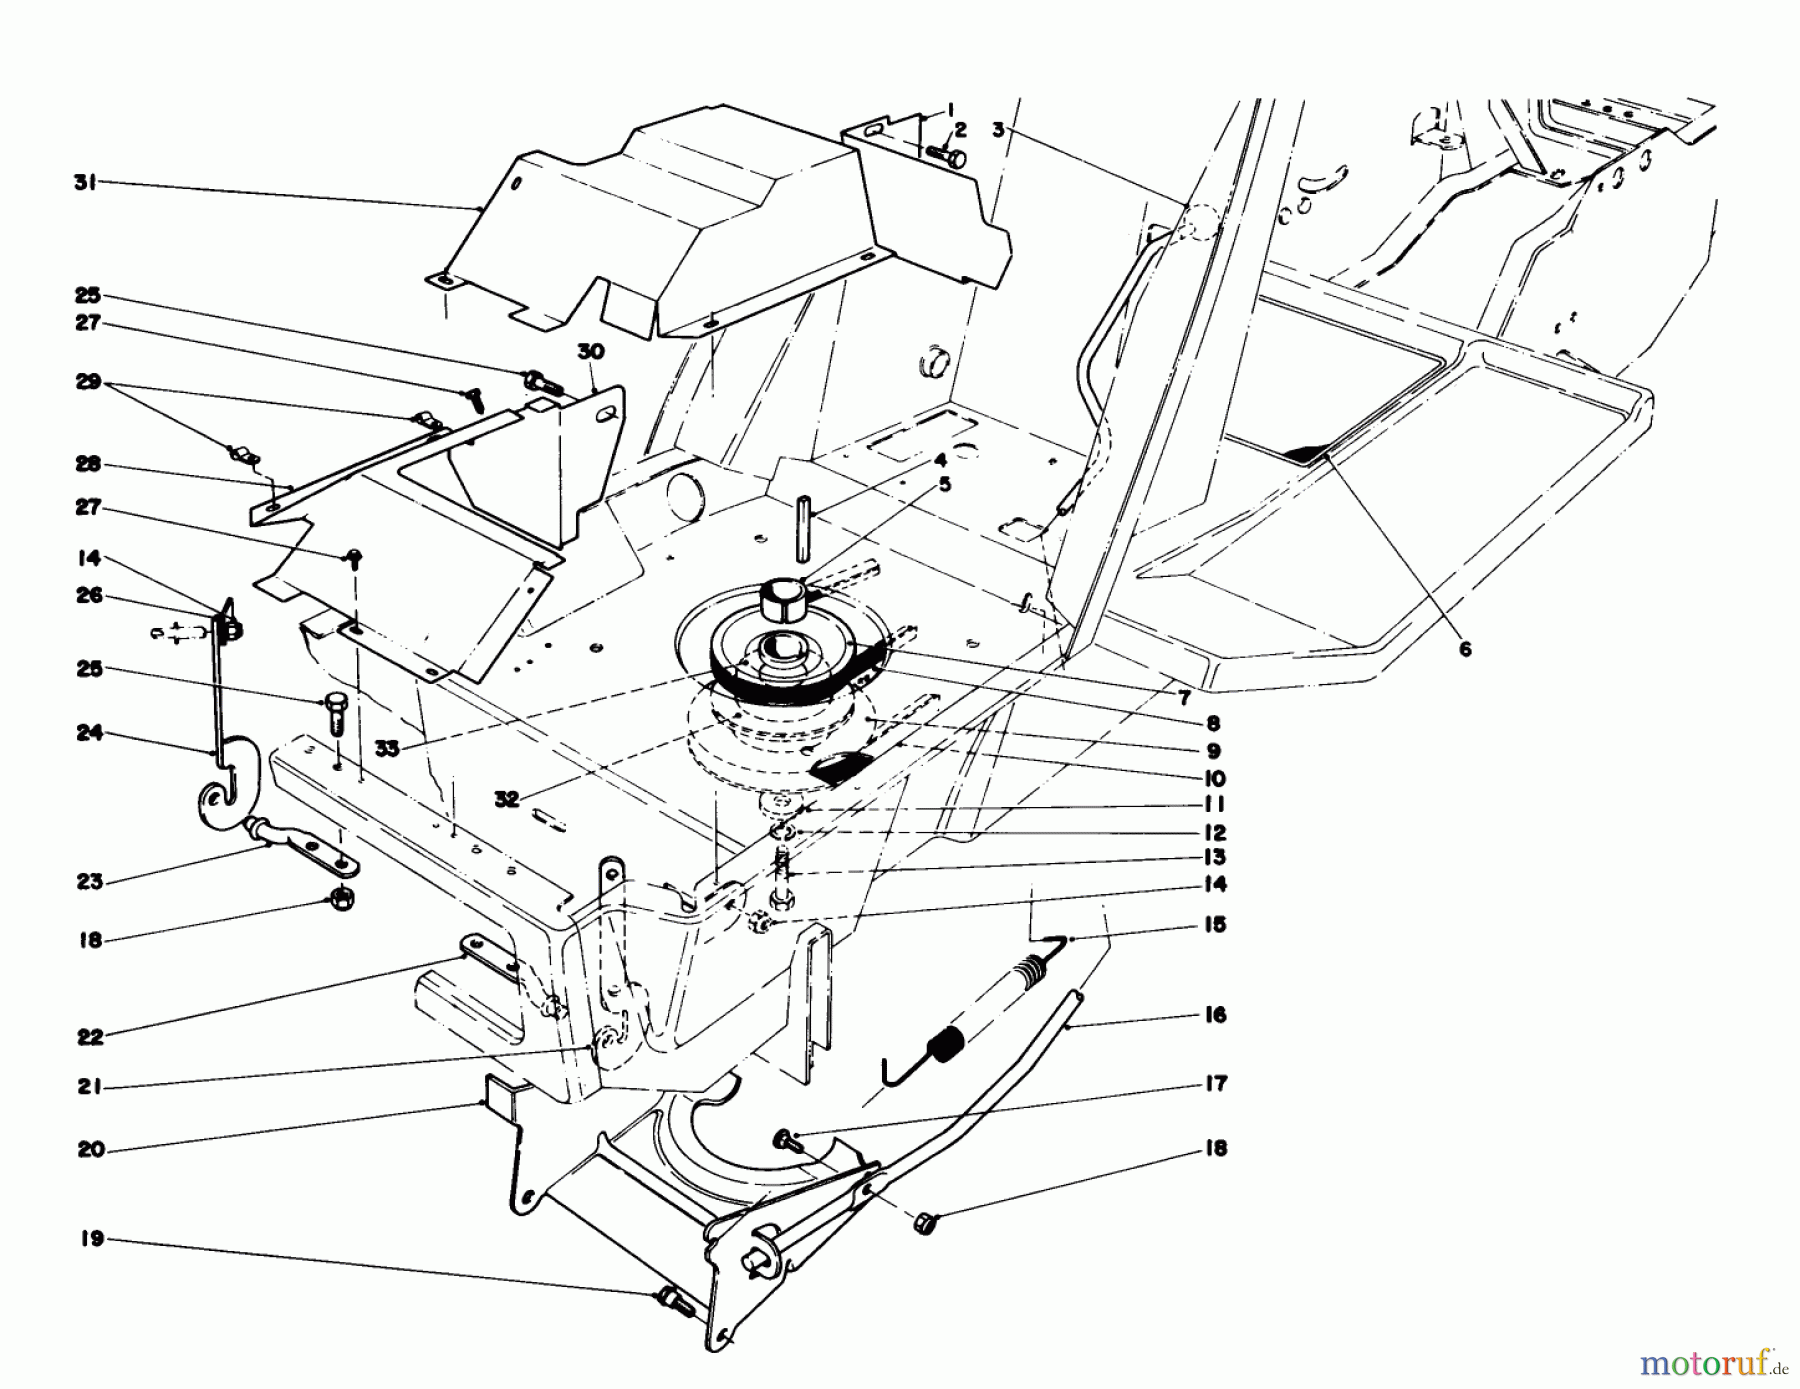  Toro Neu Mowers, Lawn & Garden Tractor Seite 1 57385 - Toro 11 hp Front Engine Rider, 1981 (1000001-1999999) CLUTCH & ACTUATOR ASSEMBLY